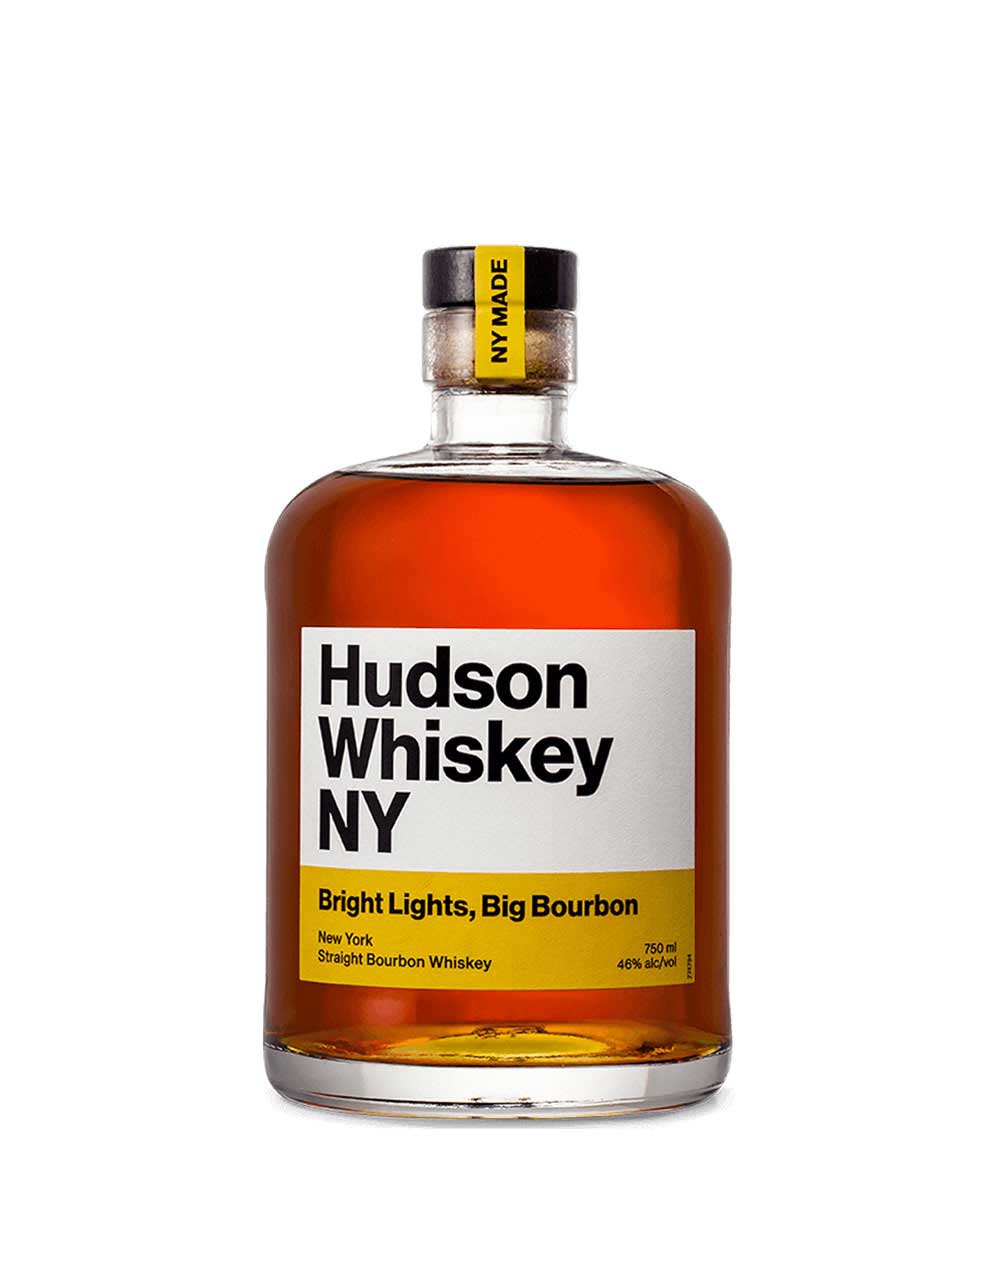 Hudson NY Bright Lights Big Bourbon